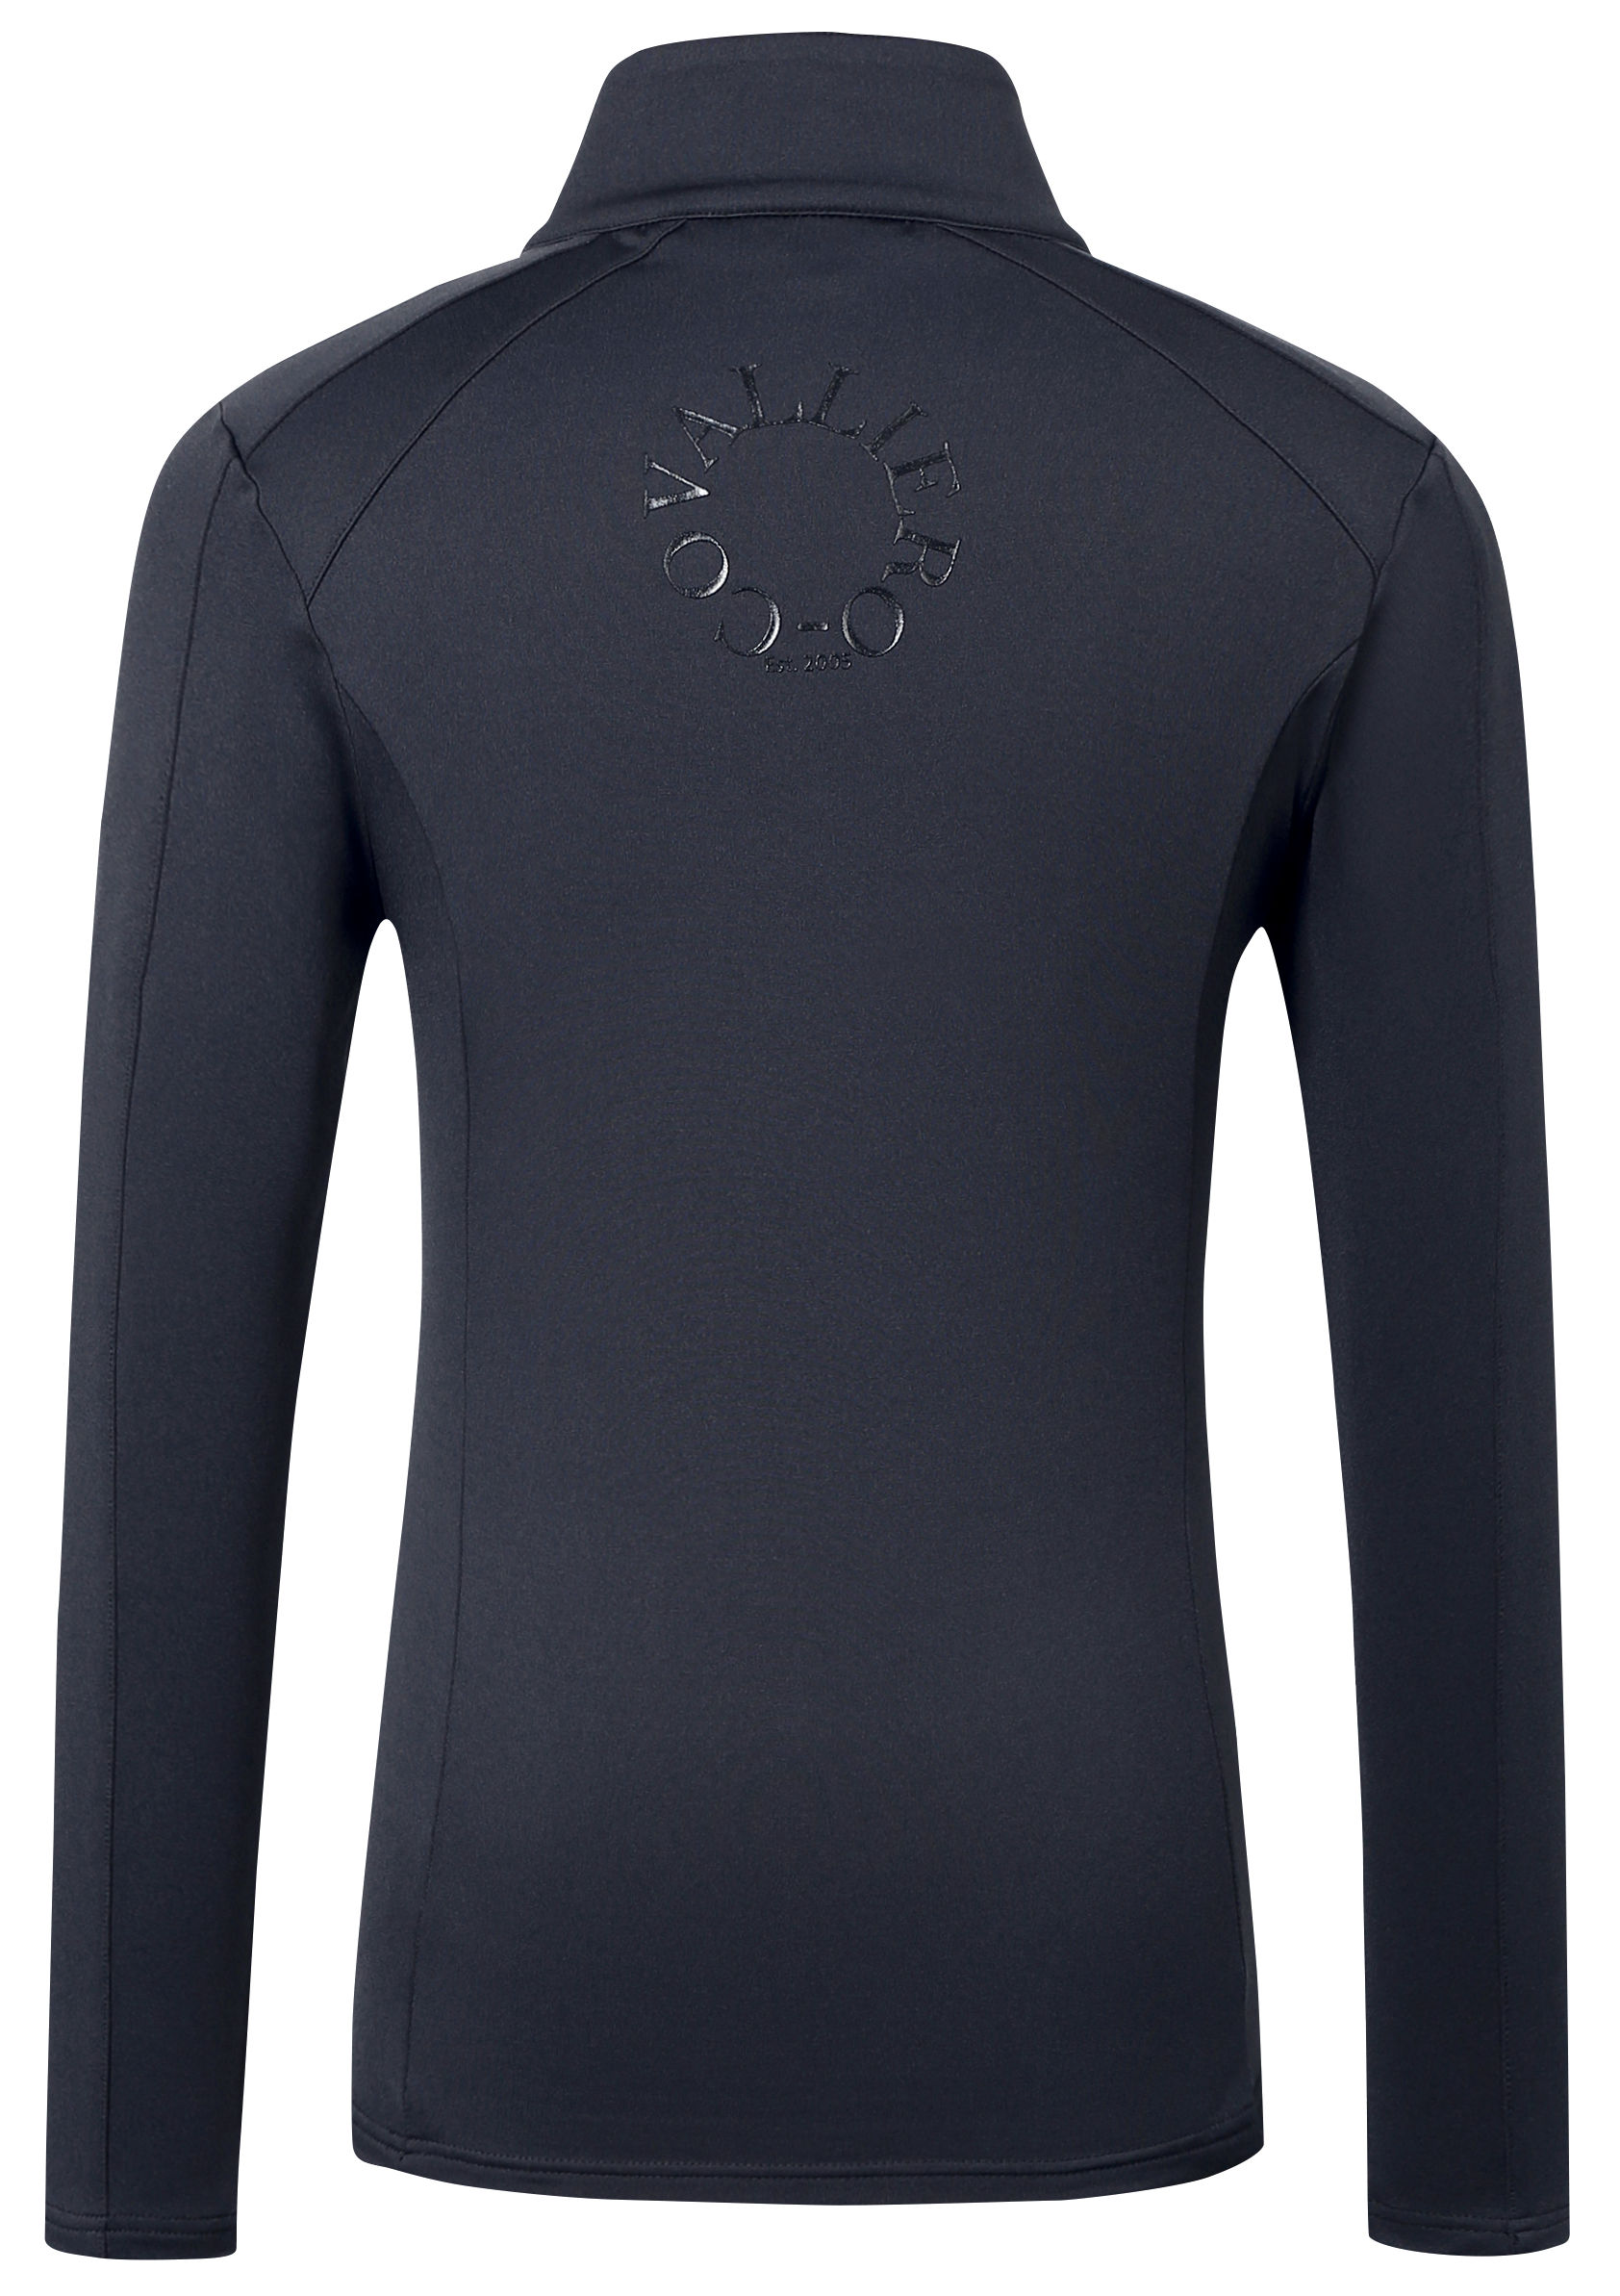 Covalliero Damen Langarm Active Shirt Trainingsshirt - schwarz - XS - 2